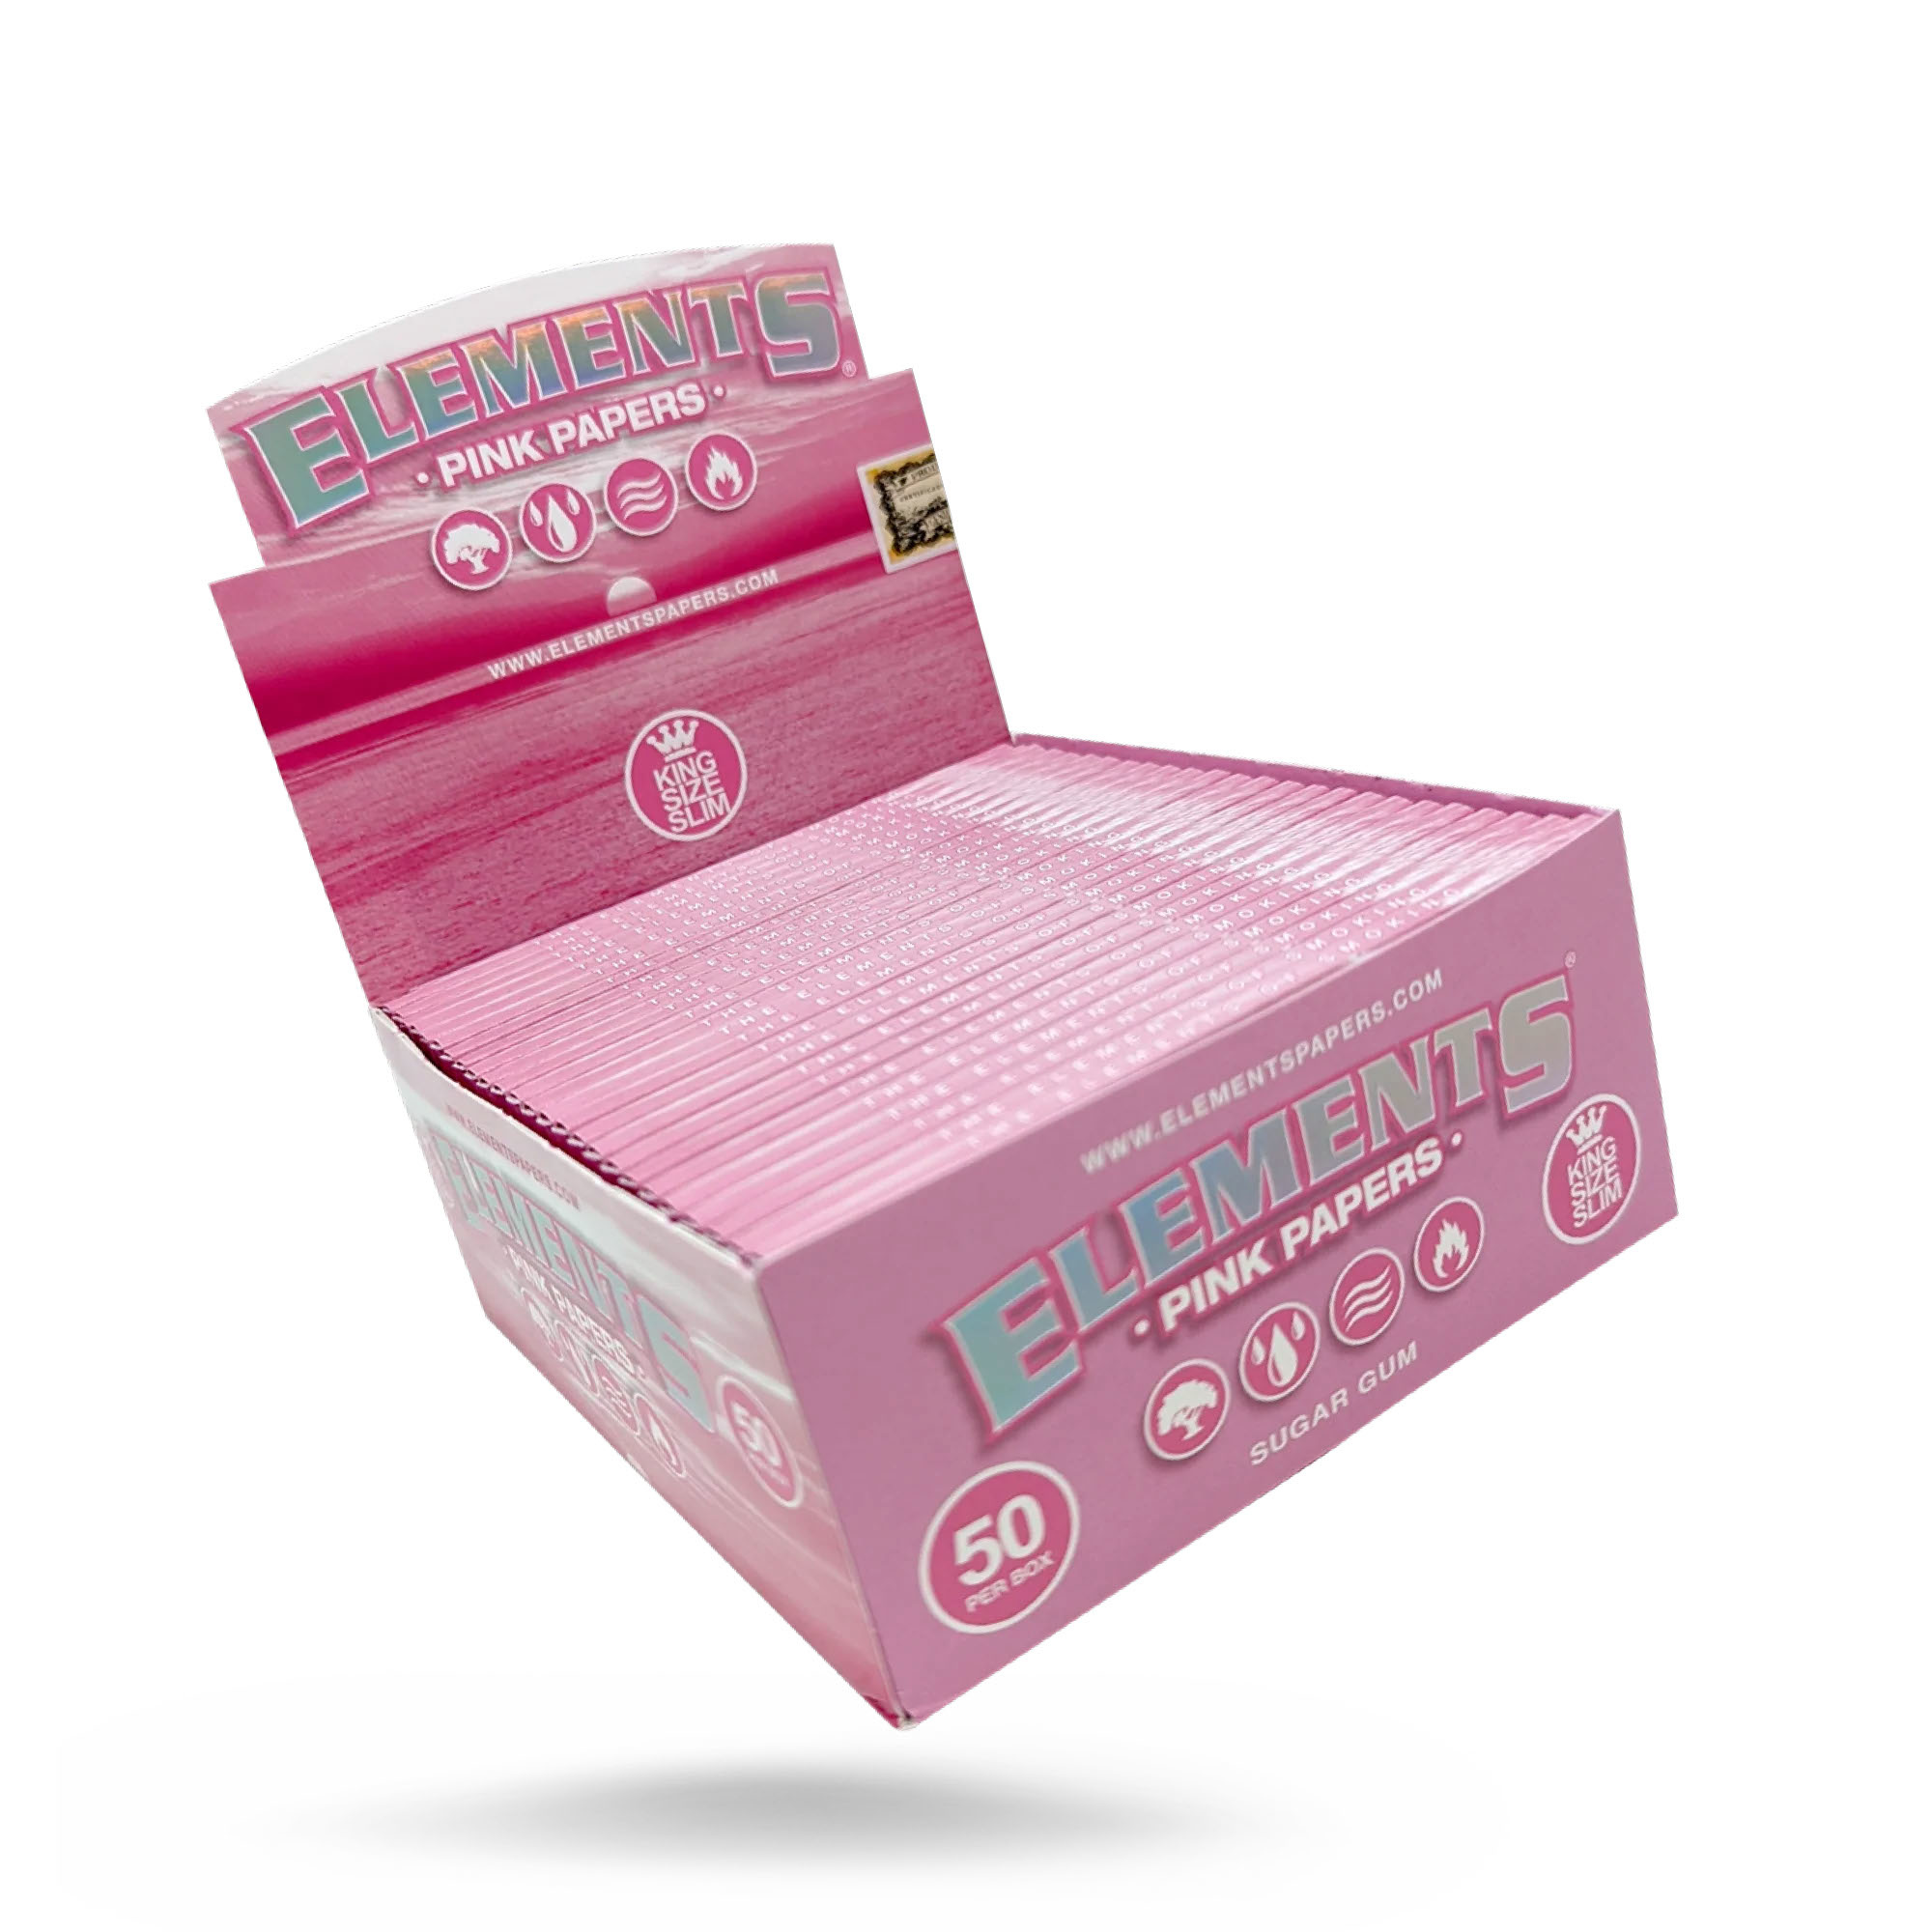  Blazy Susan - Kingsize Slim Pink Rolling Papers - 50 Leaves Per  Pack : Everything Else